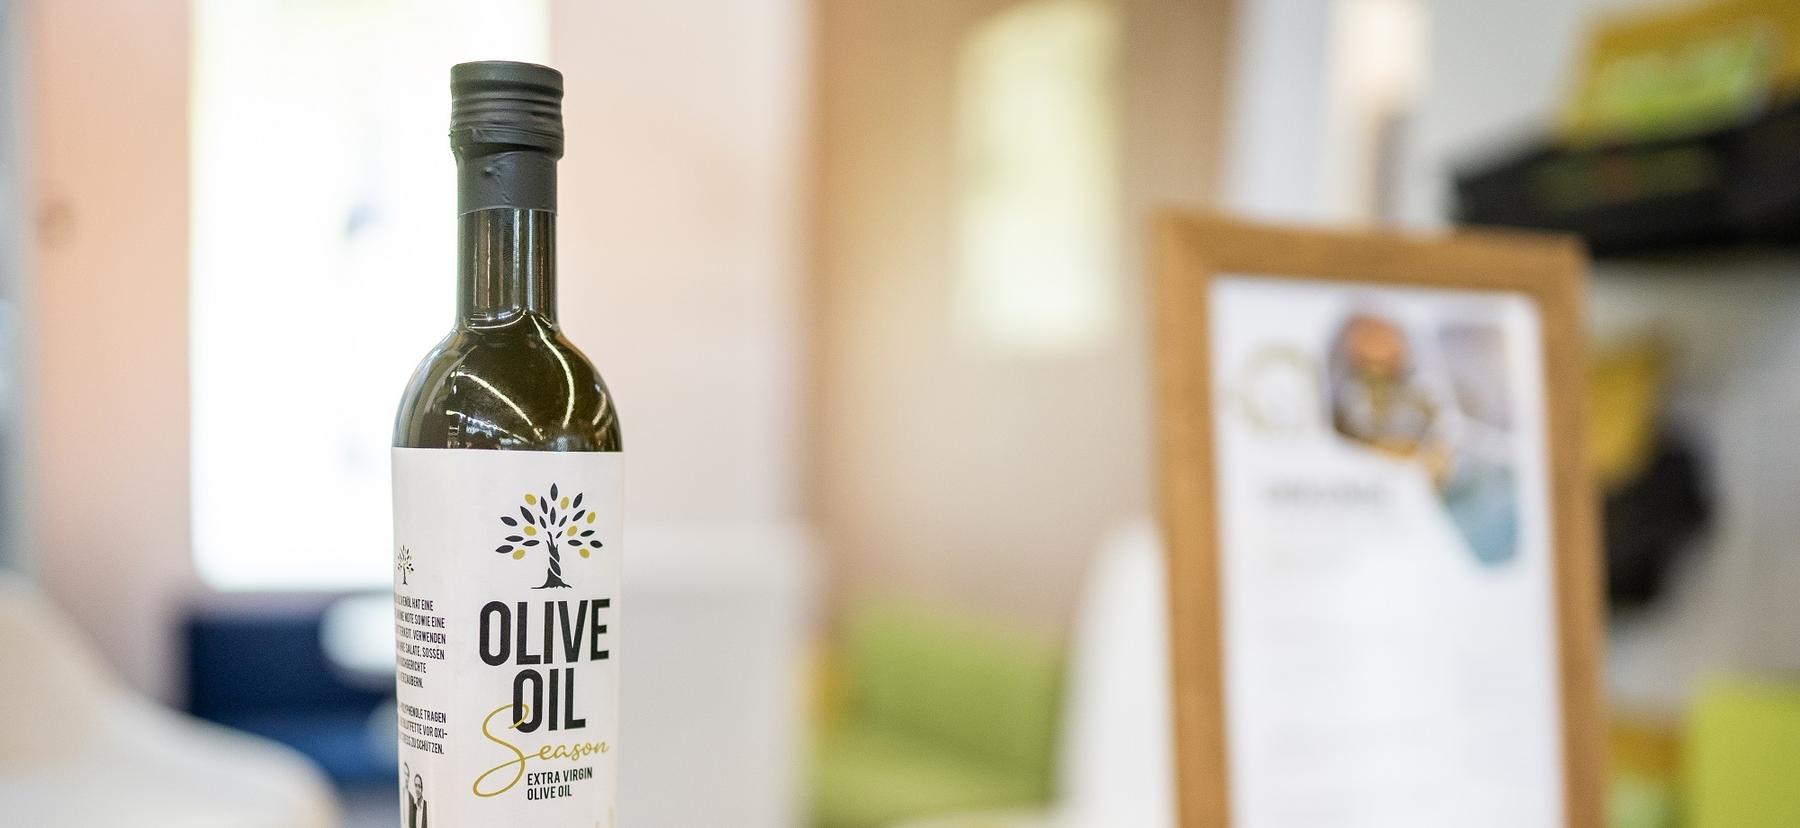 Please contact us - Olive Oil Season